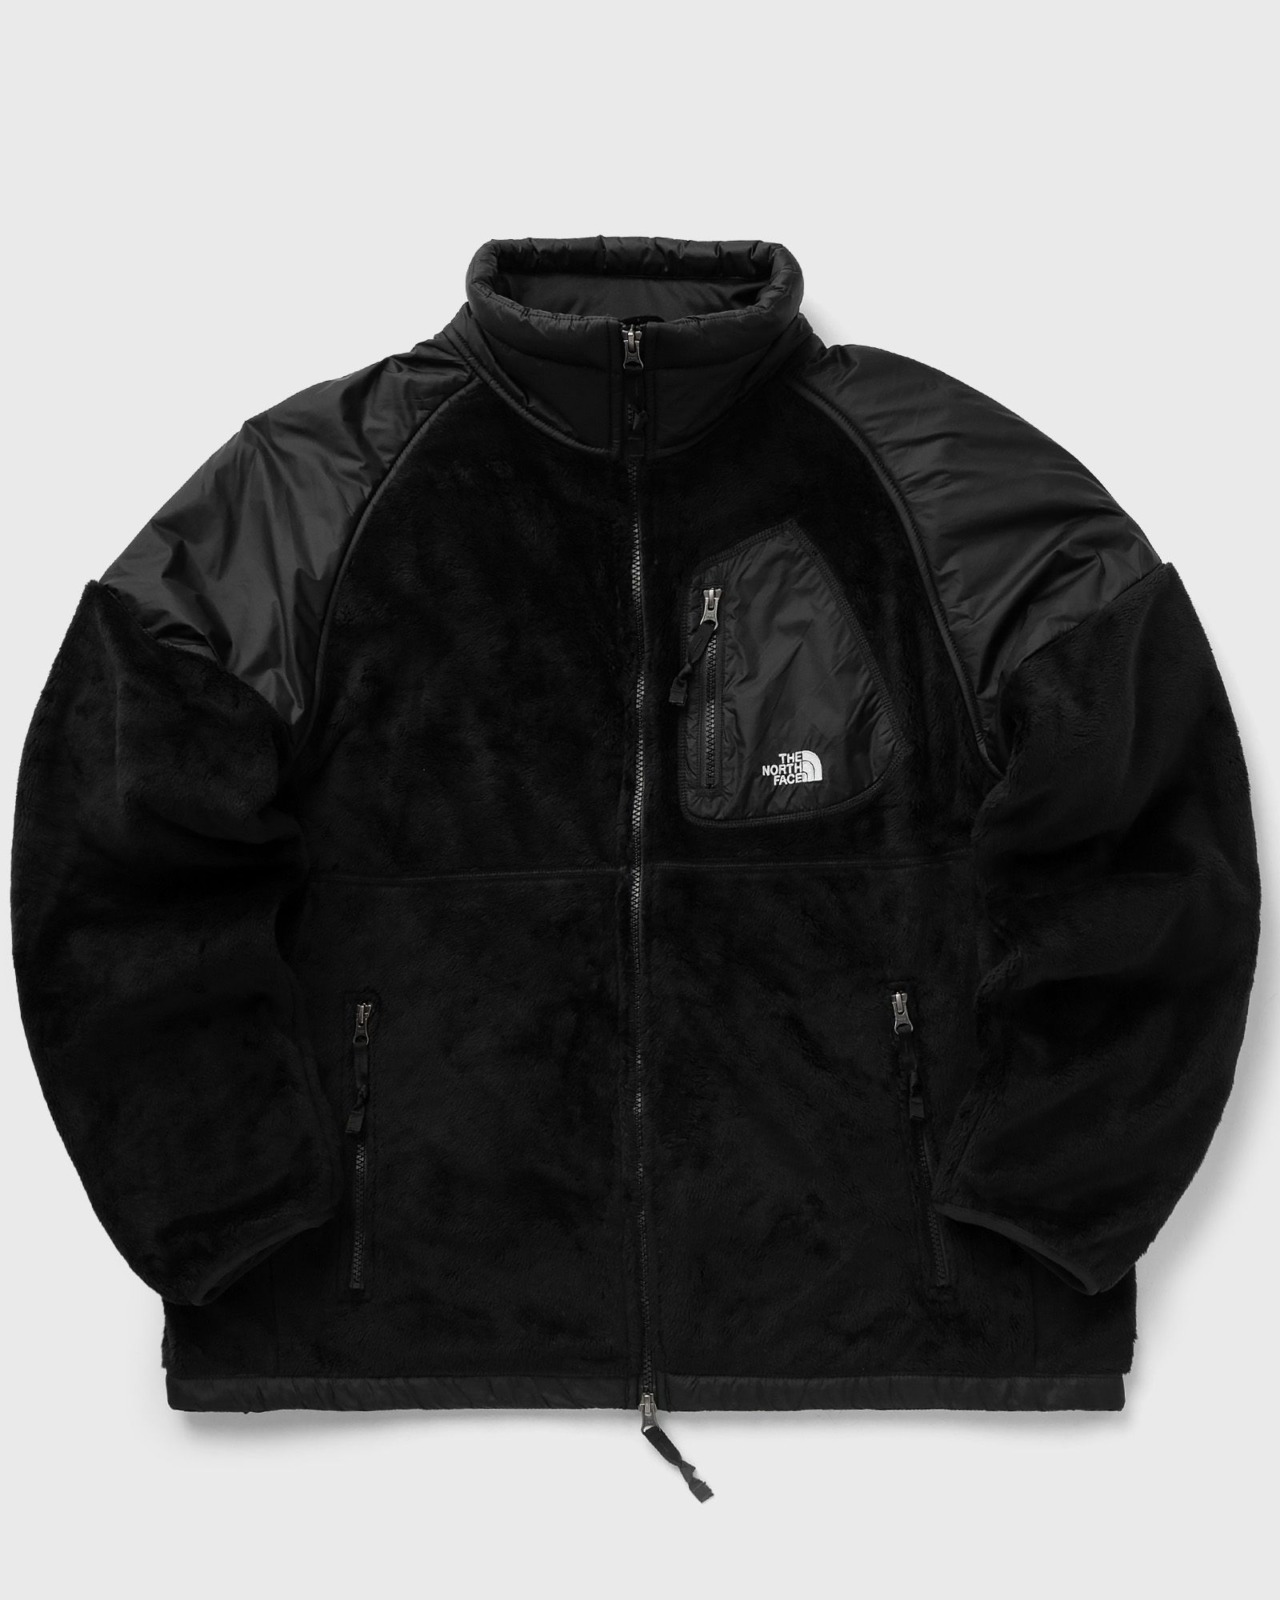 Bstn - Black - Men's Fleece Jacket GOOFASH